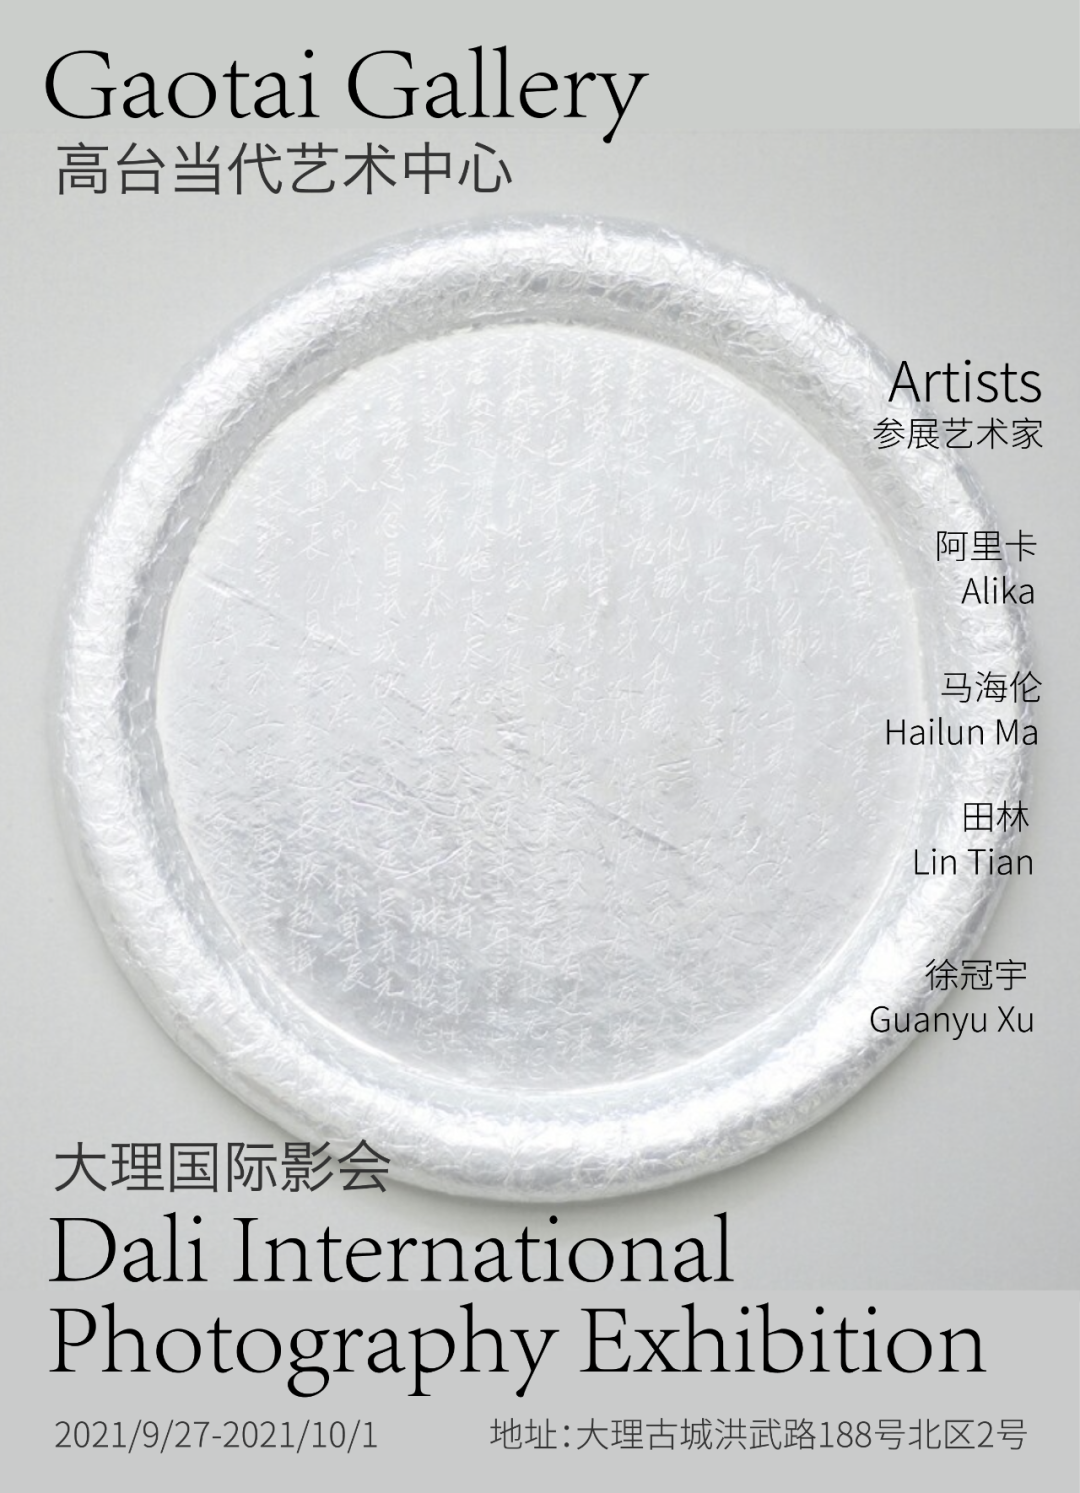 Gaotai Gallery participates in Dali International Photography Exhibition